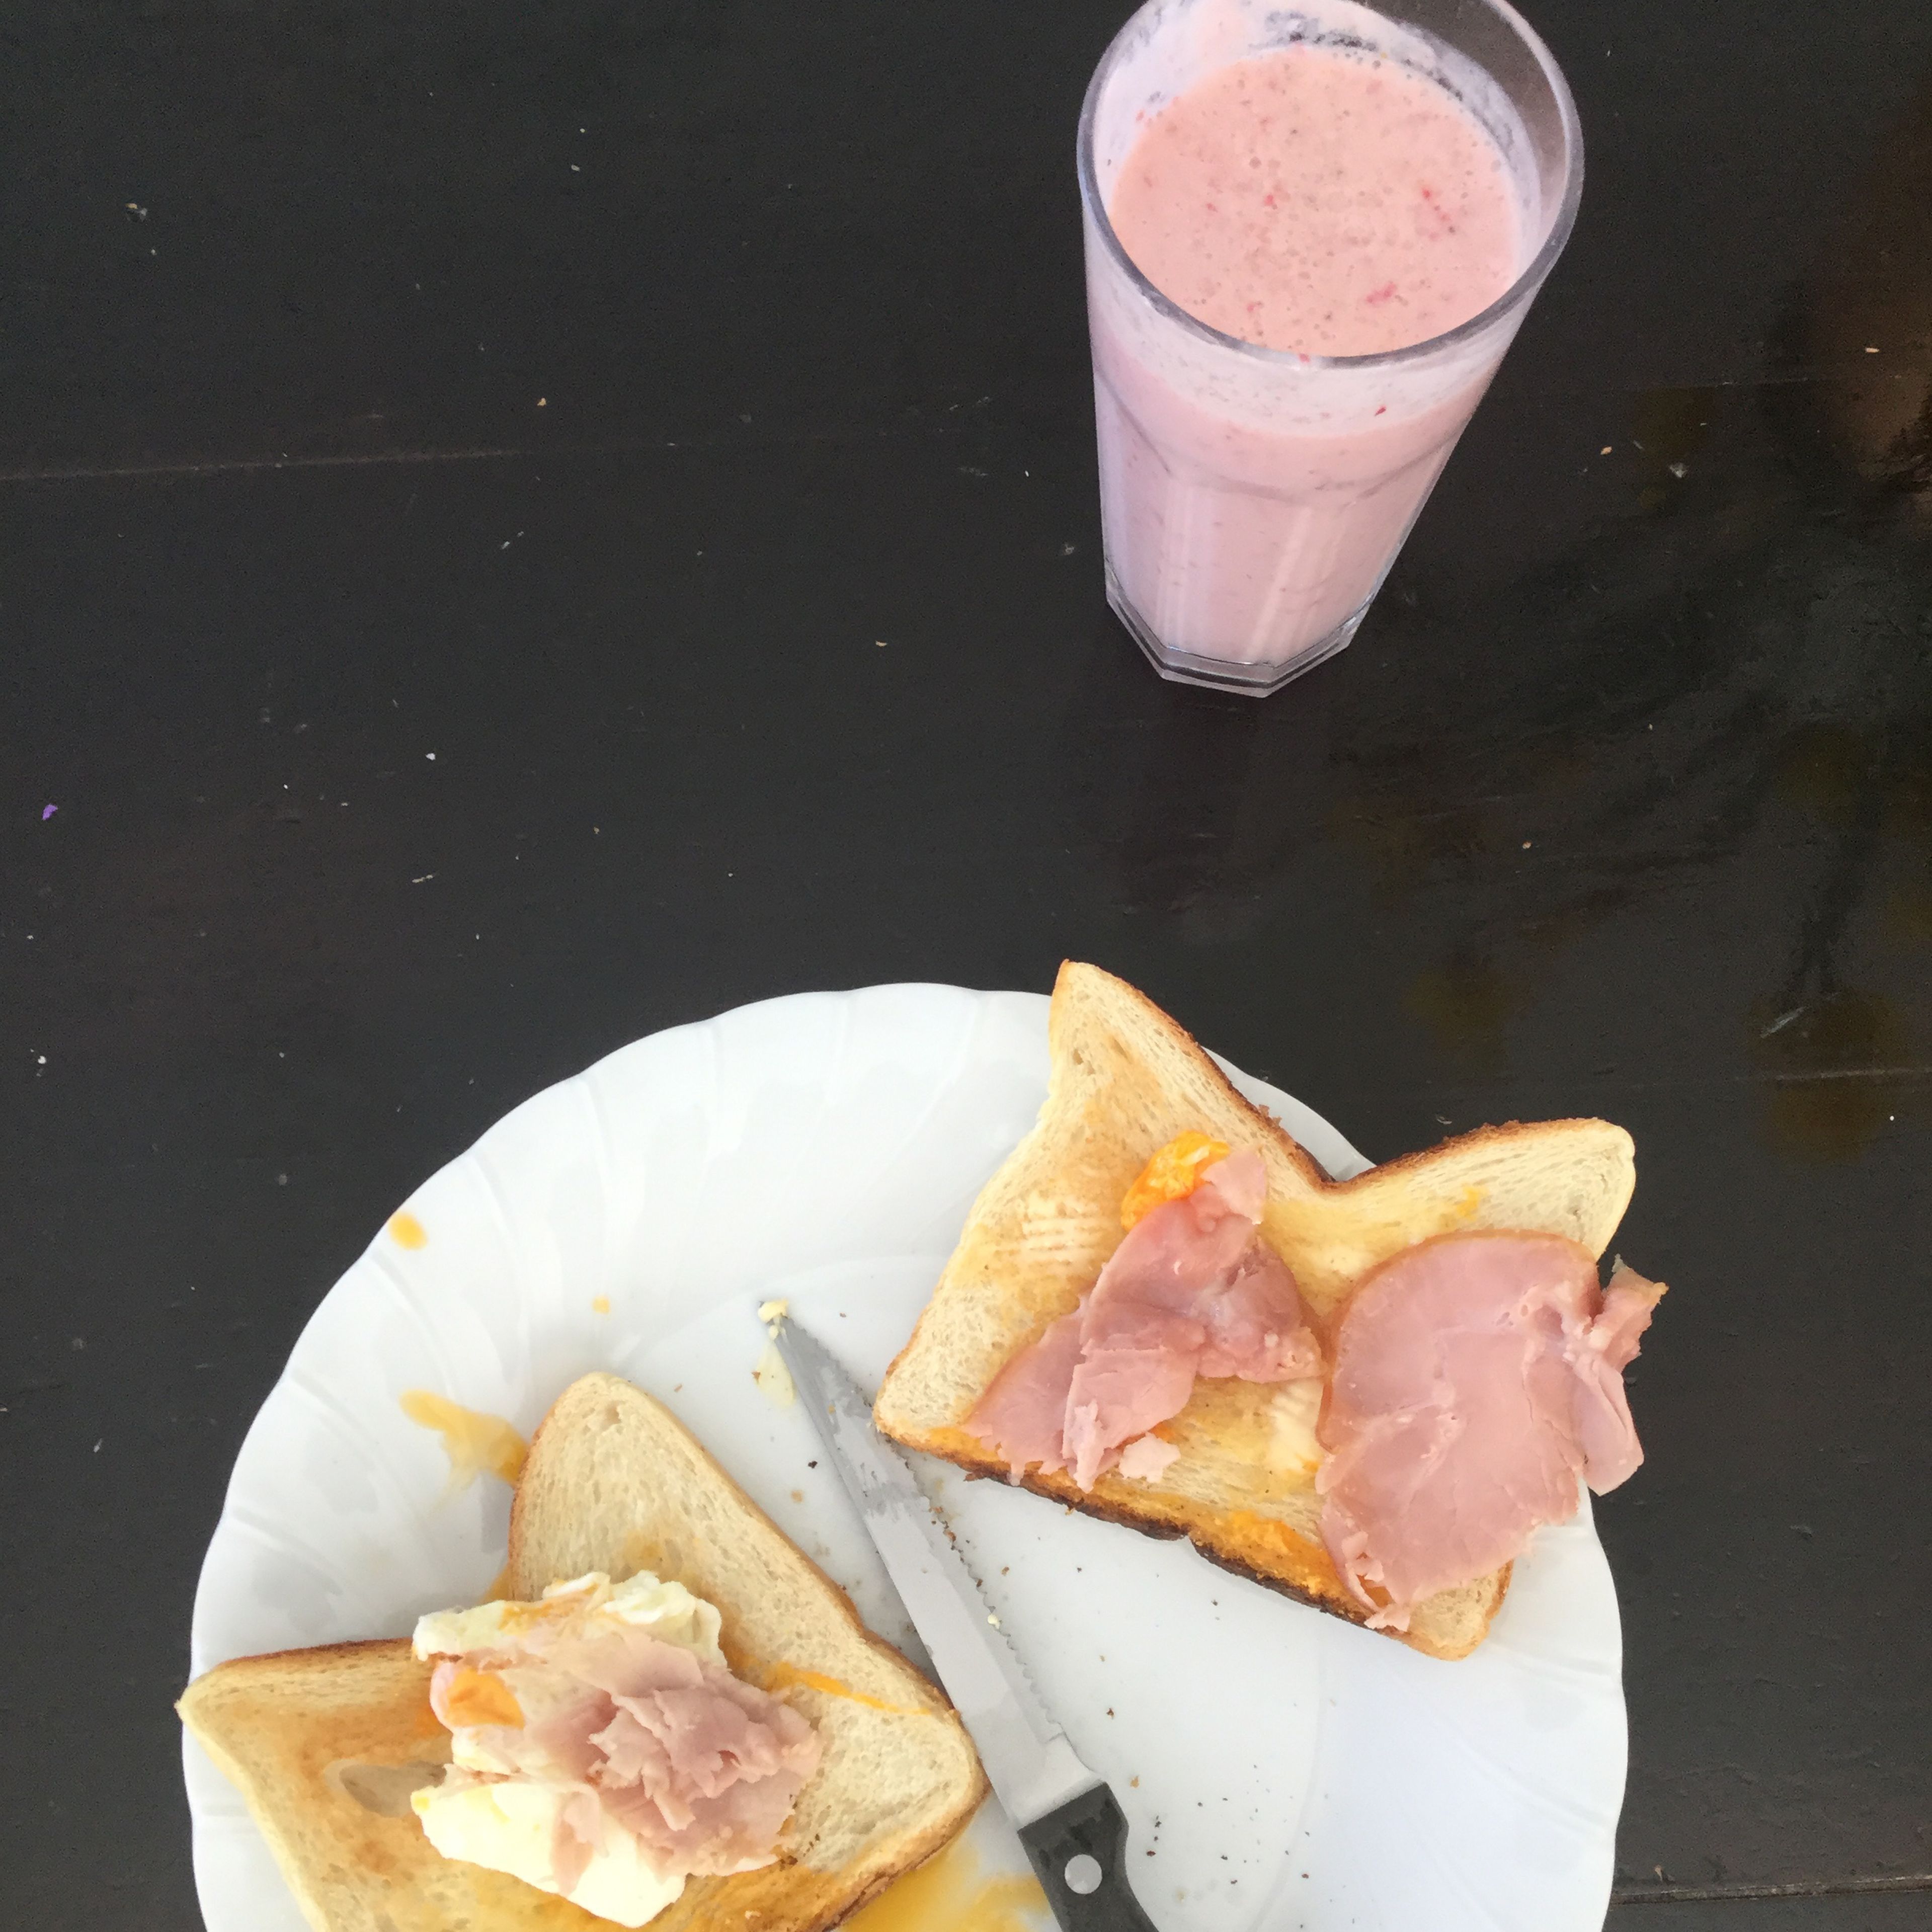 Strawberry smoothie w/ Egg, ham and toast breakfast!